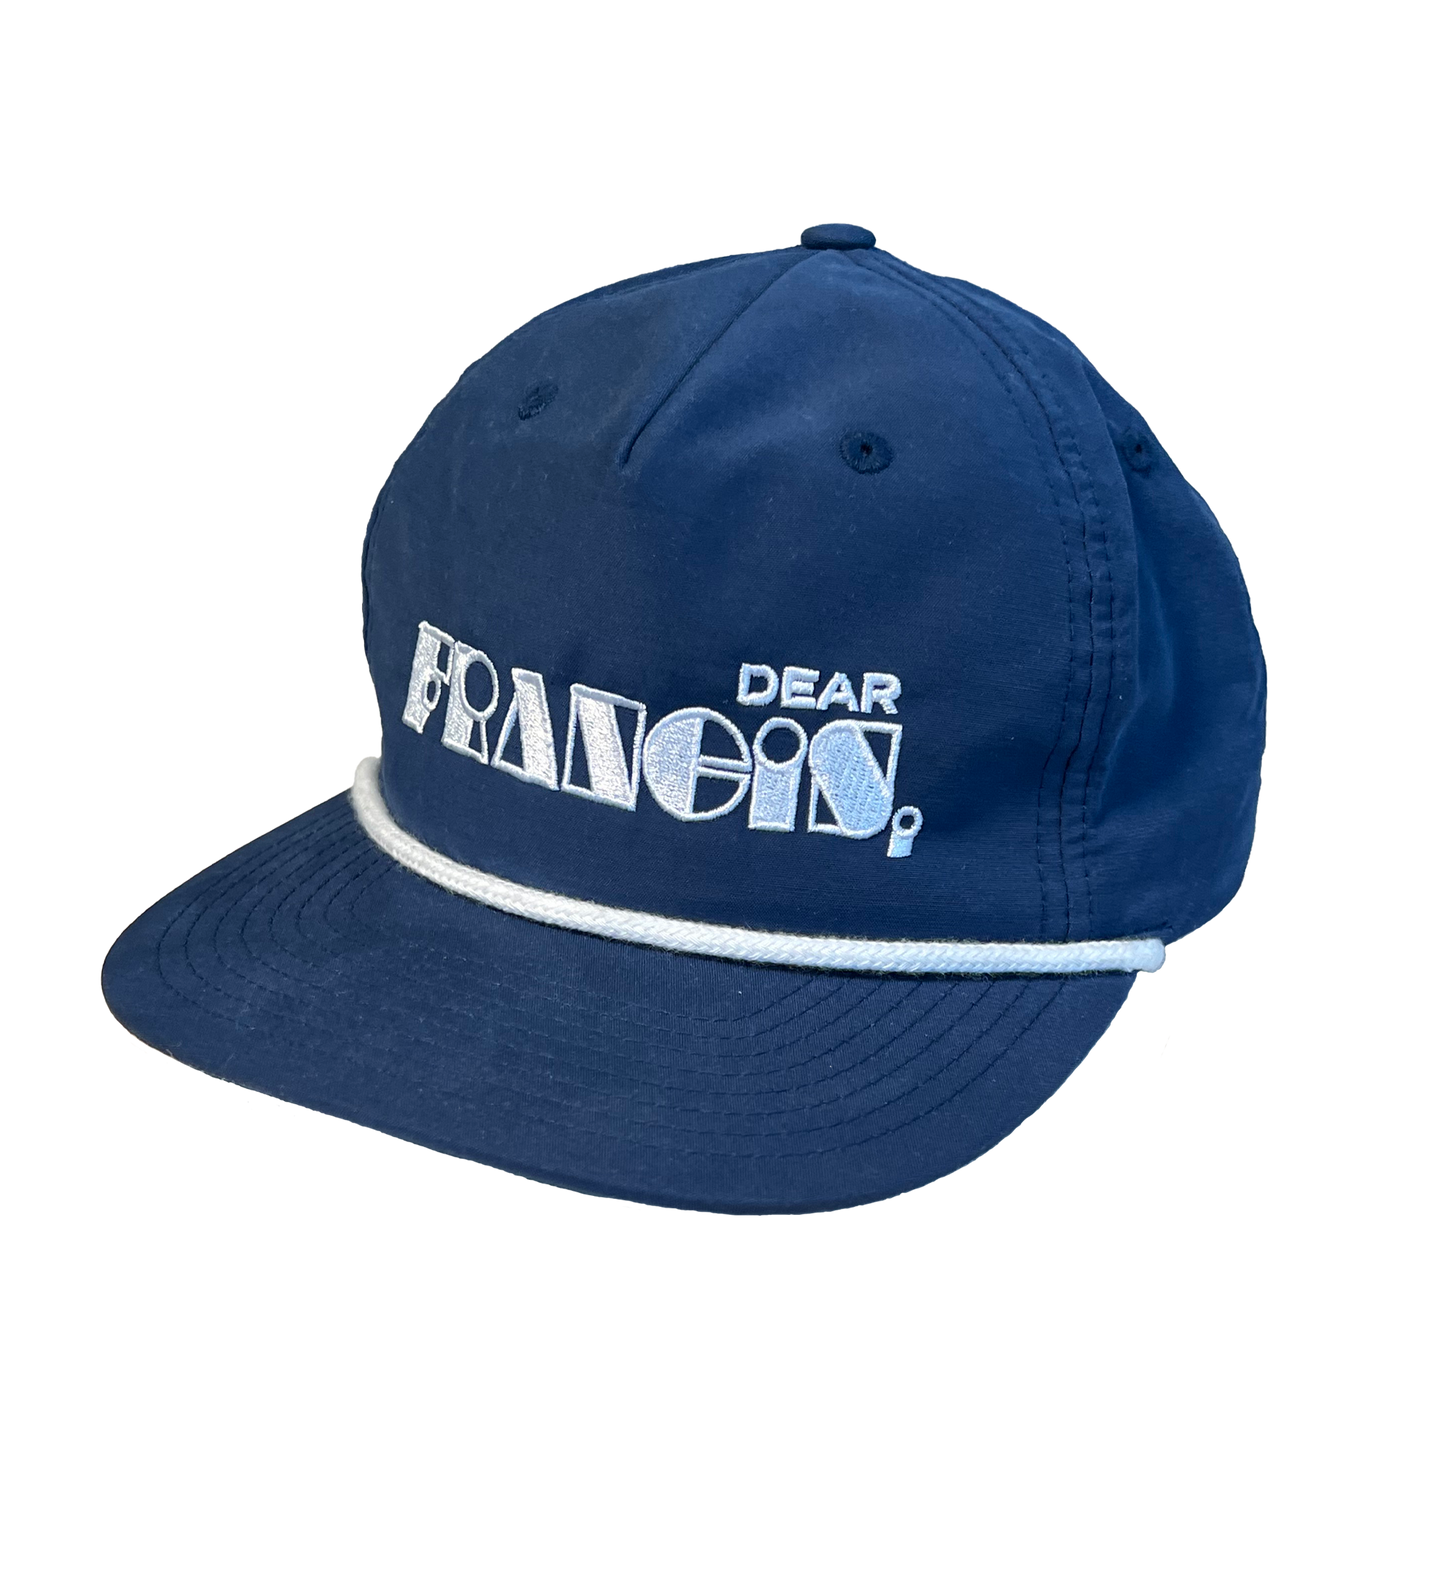 Dear Francis Navy/White "Grandpa" hat